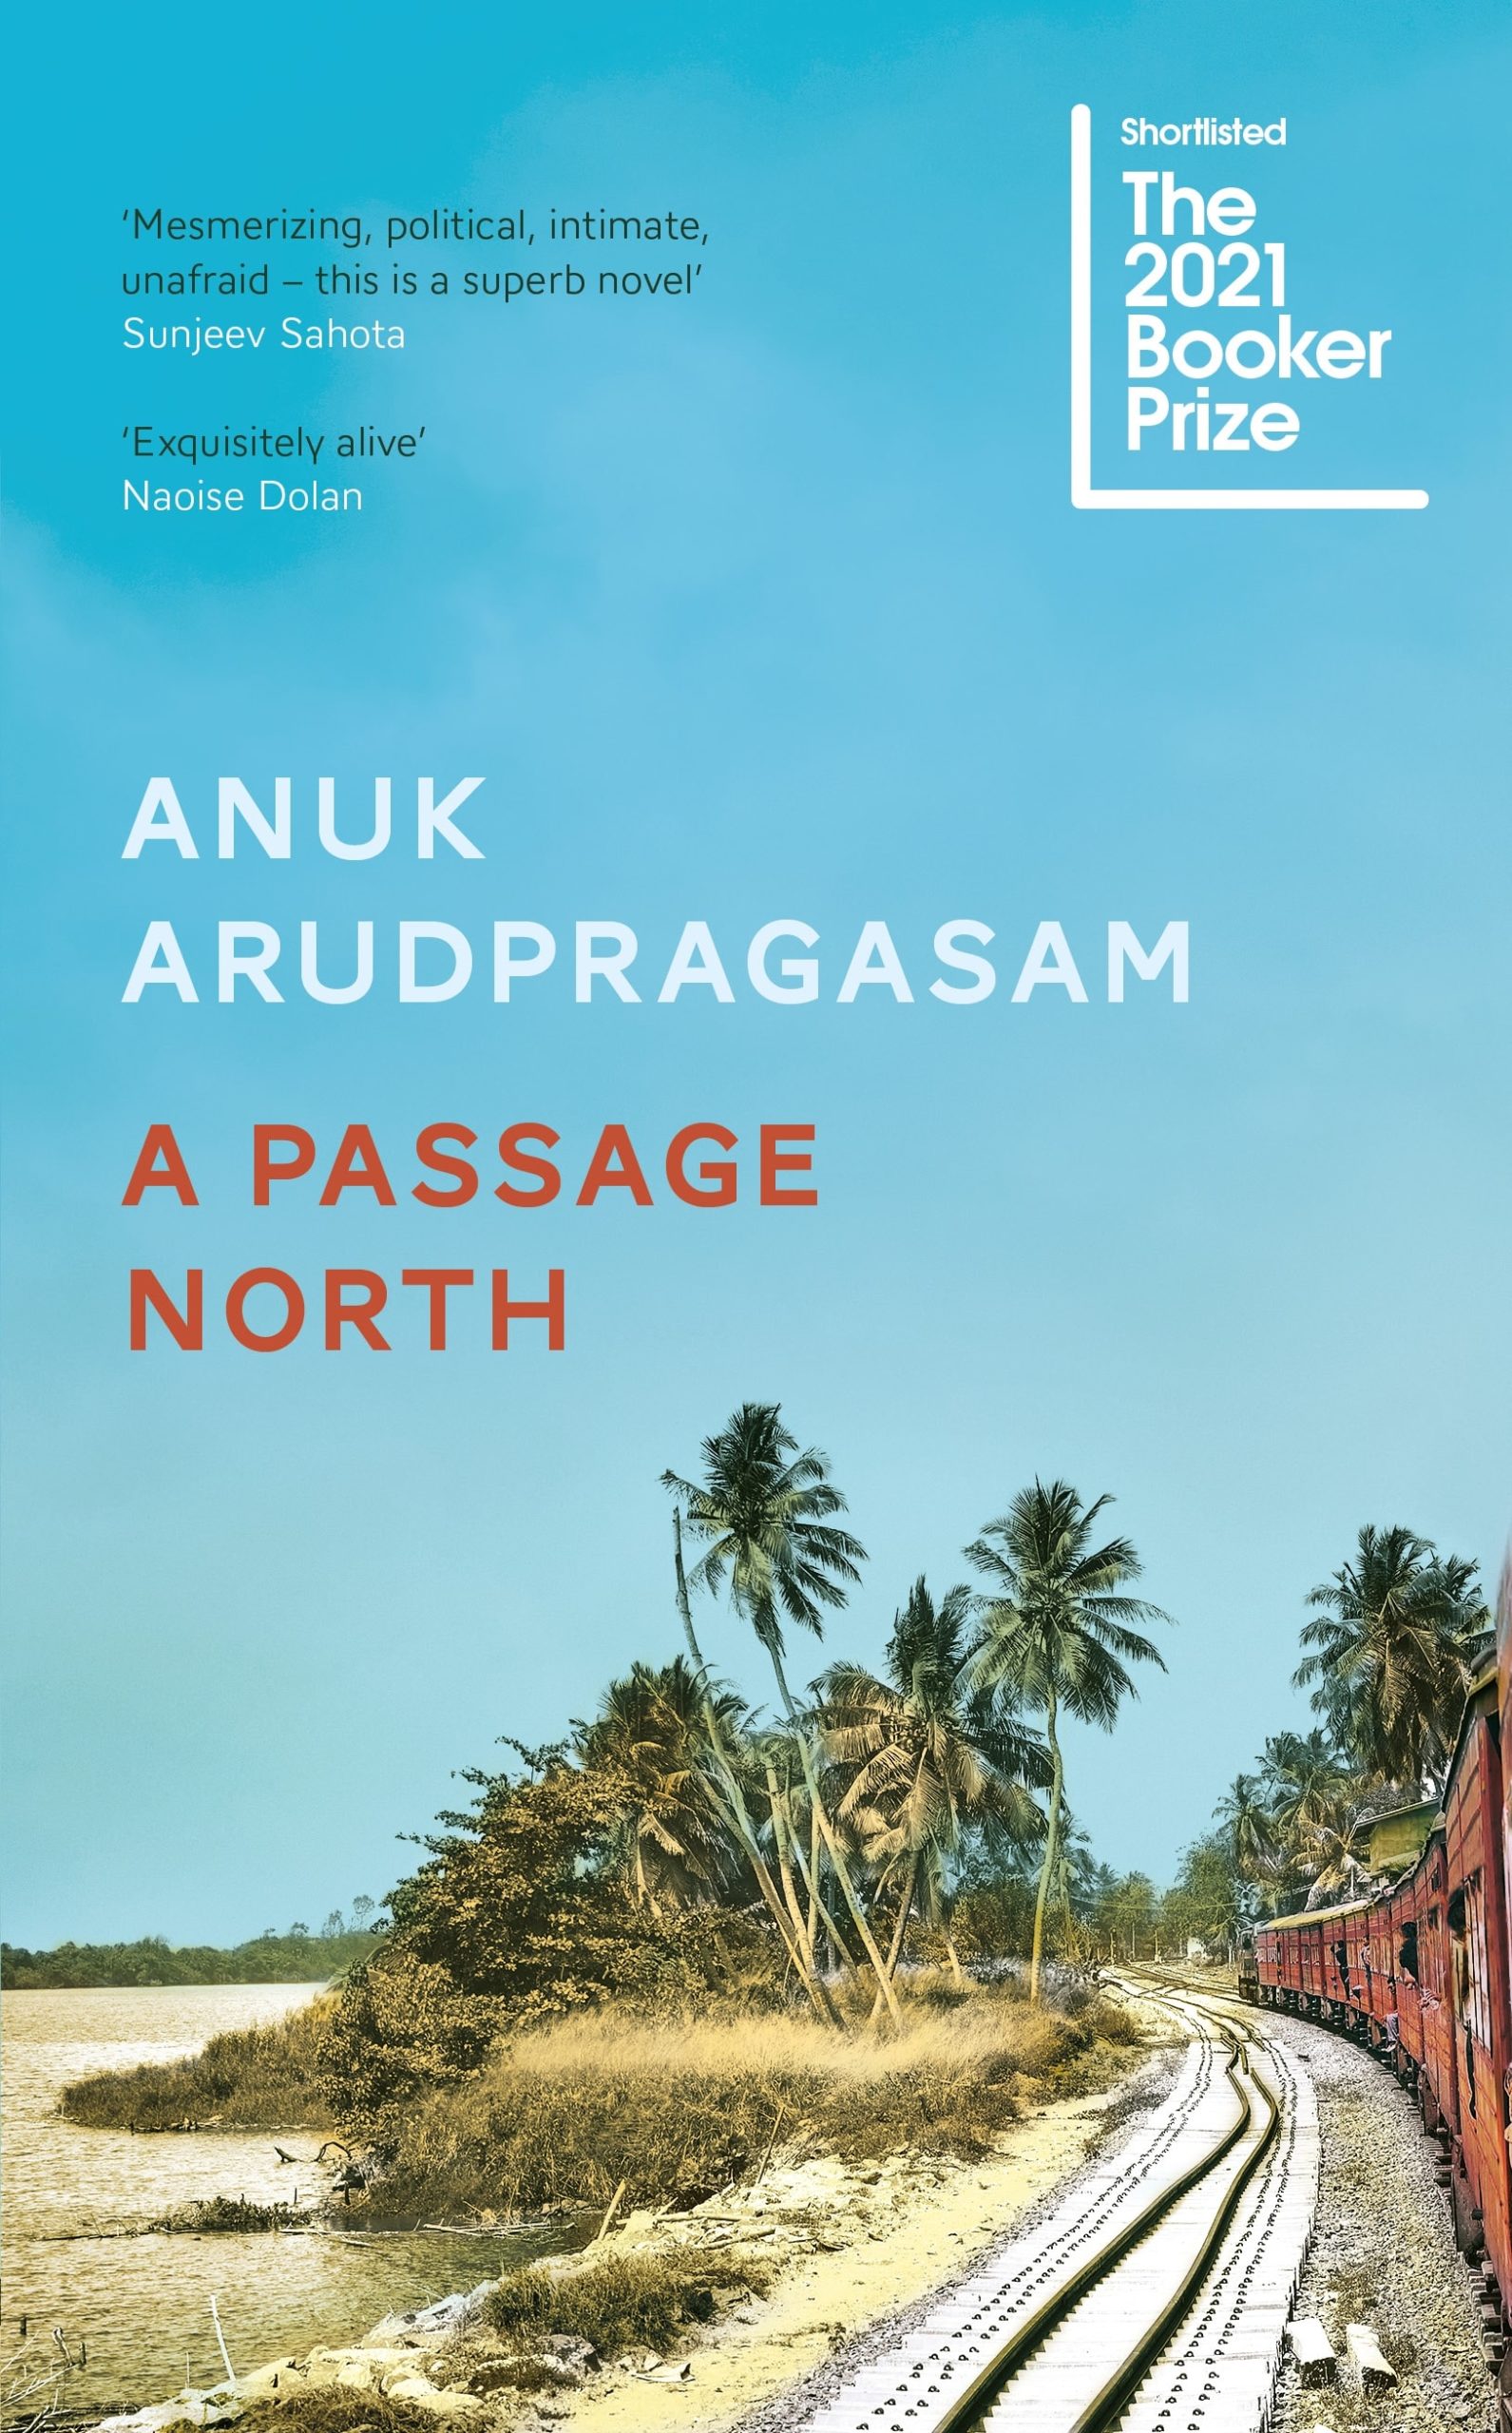  <em>A Passage North</em> Shortlisted for The Booker Prize 2021